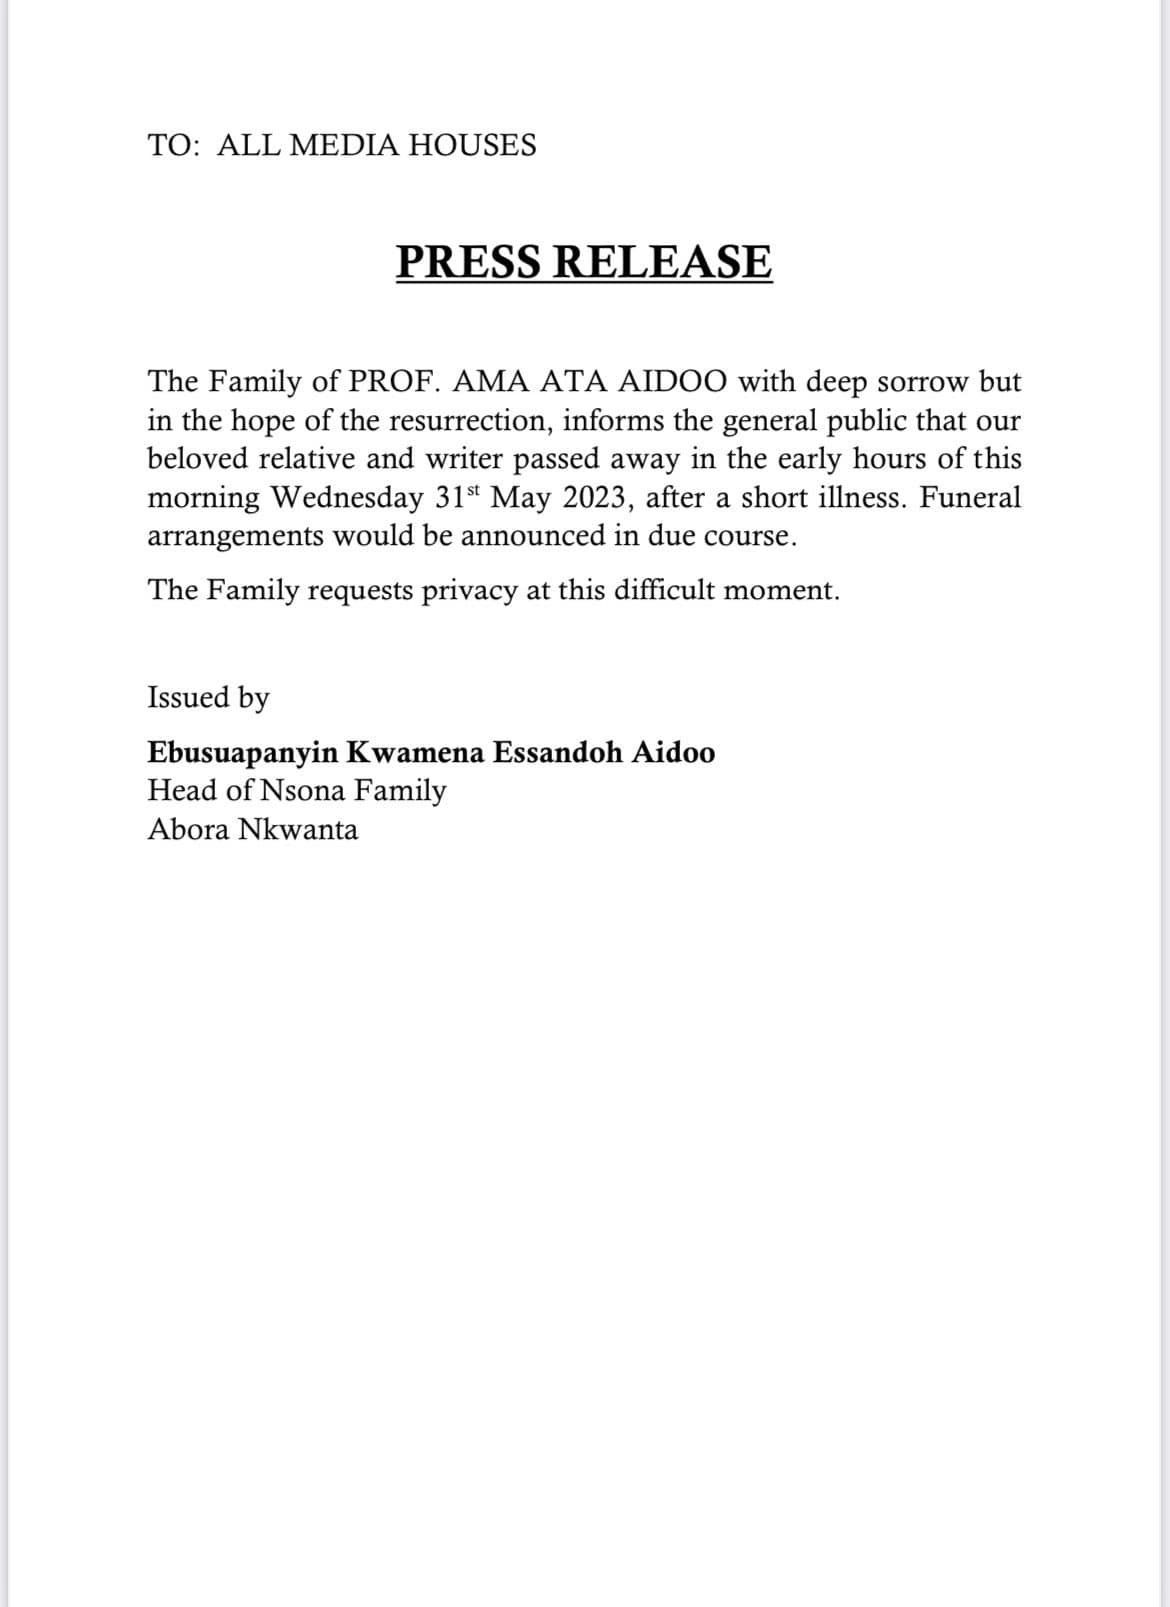 Statement from family of Prof Ama Atta Aidoo